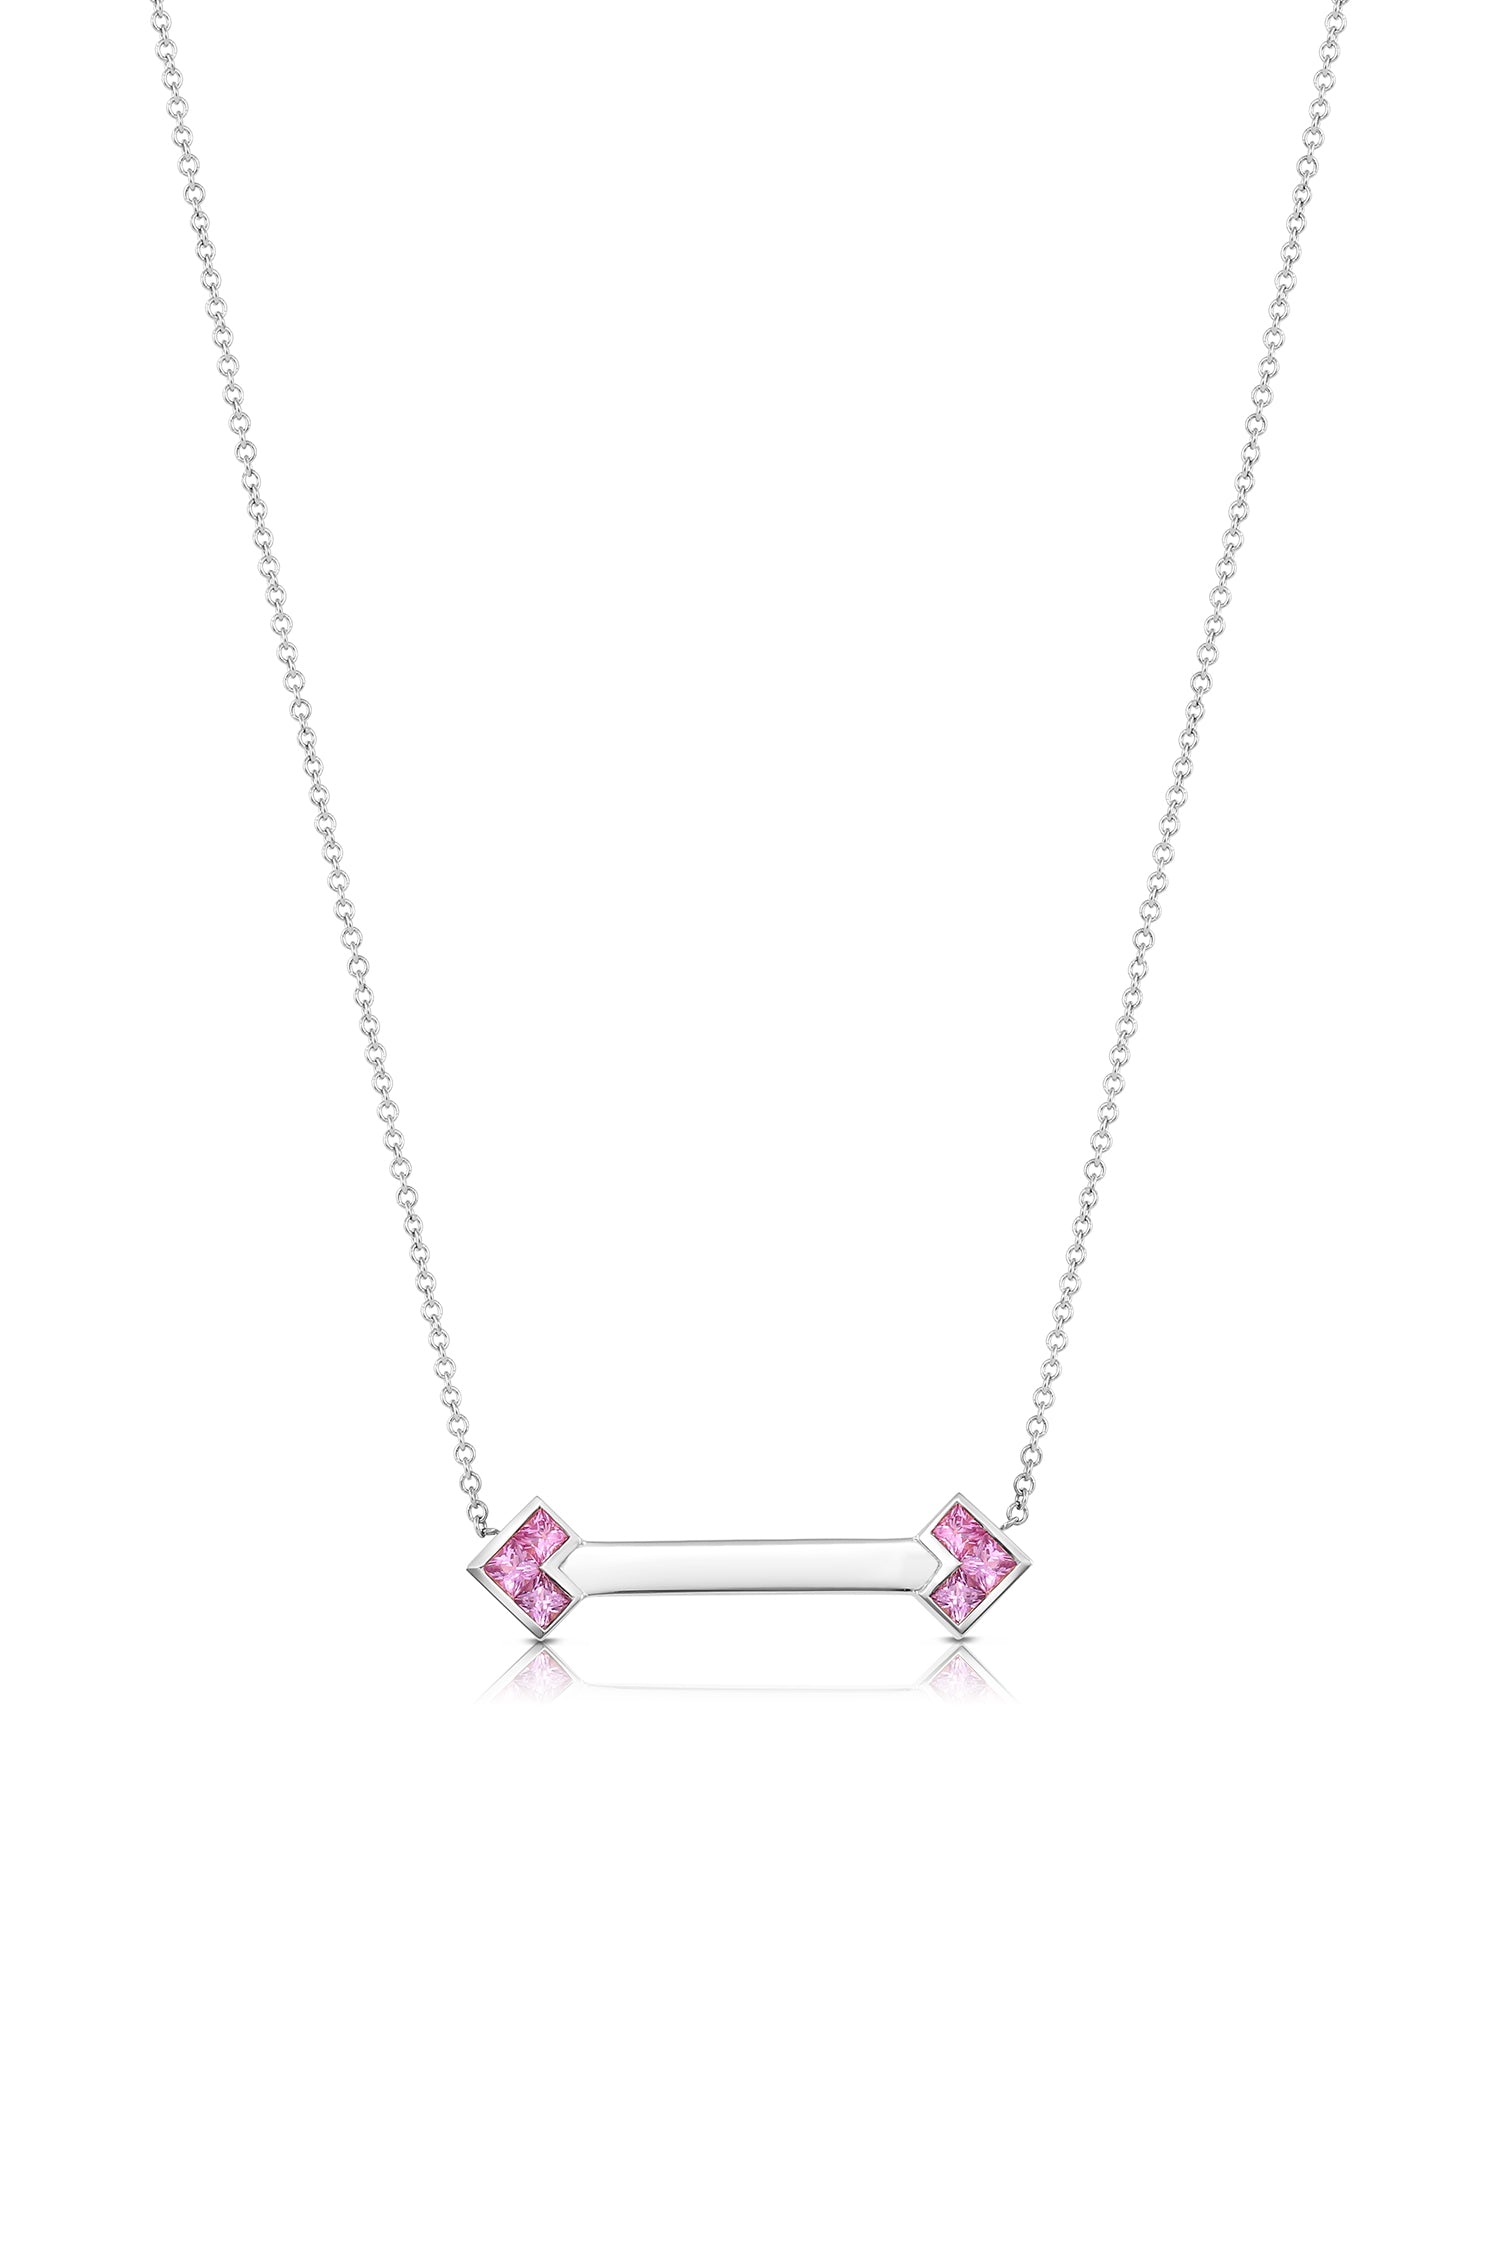 TIFFANY & CO Heart Diamond Platinum & Pink Sapphire Necklace Large New!!  2.25ct! £4,799.00 - PicClick UK